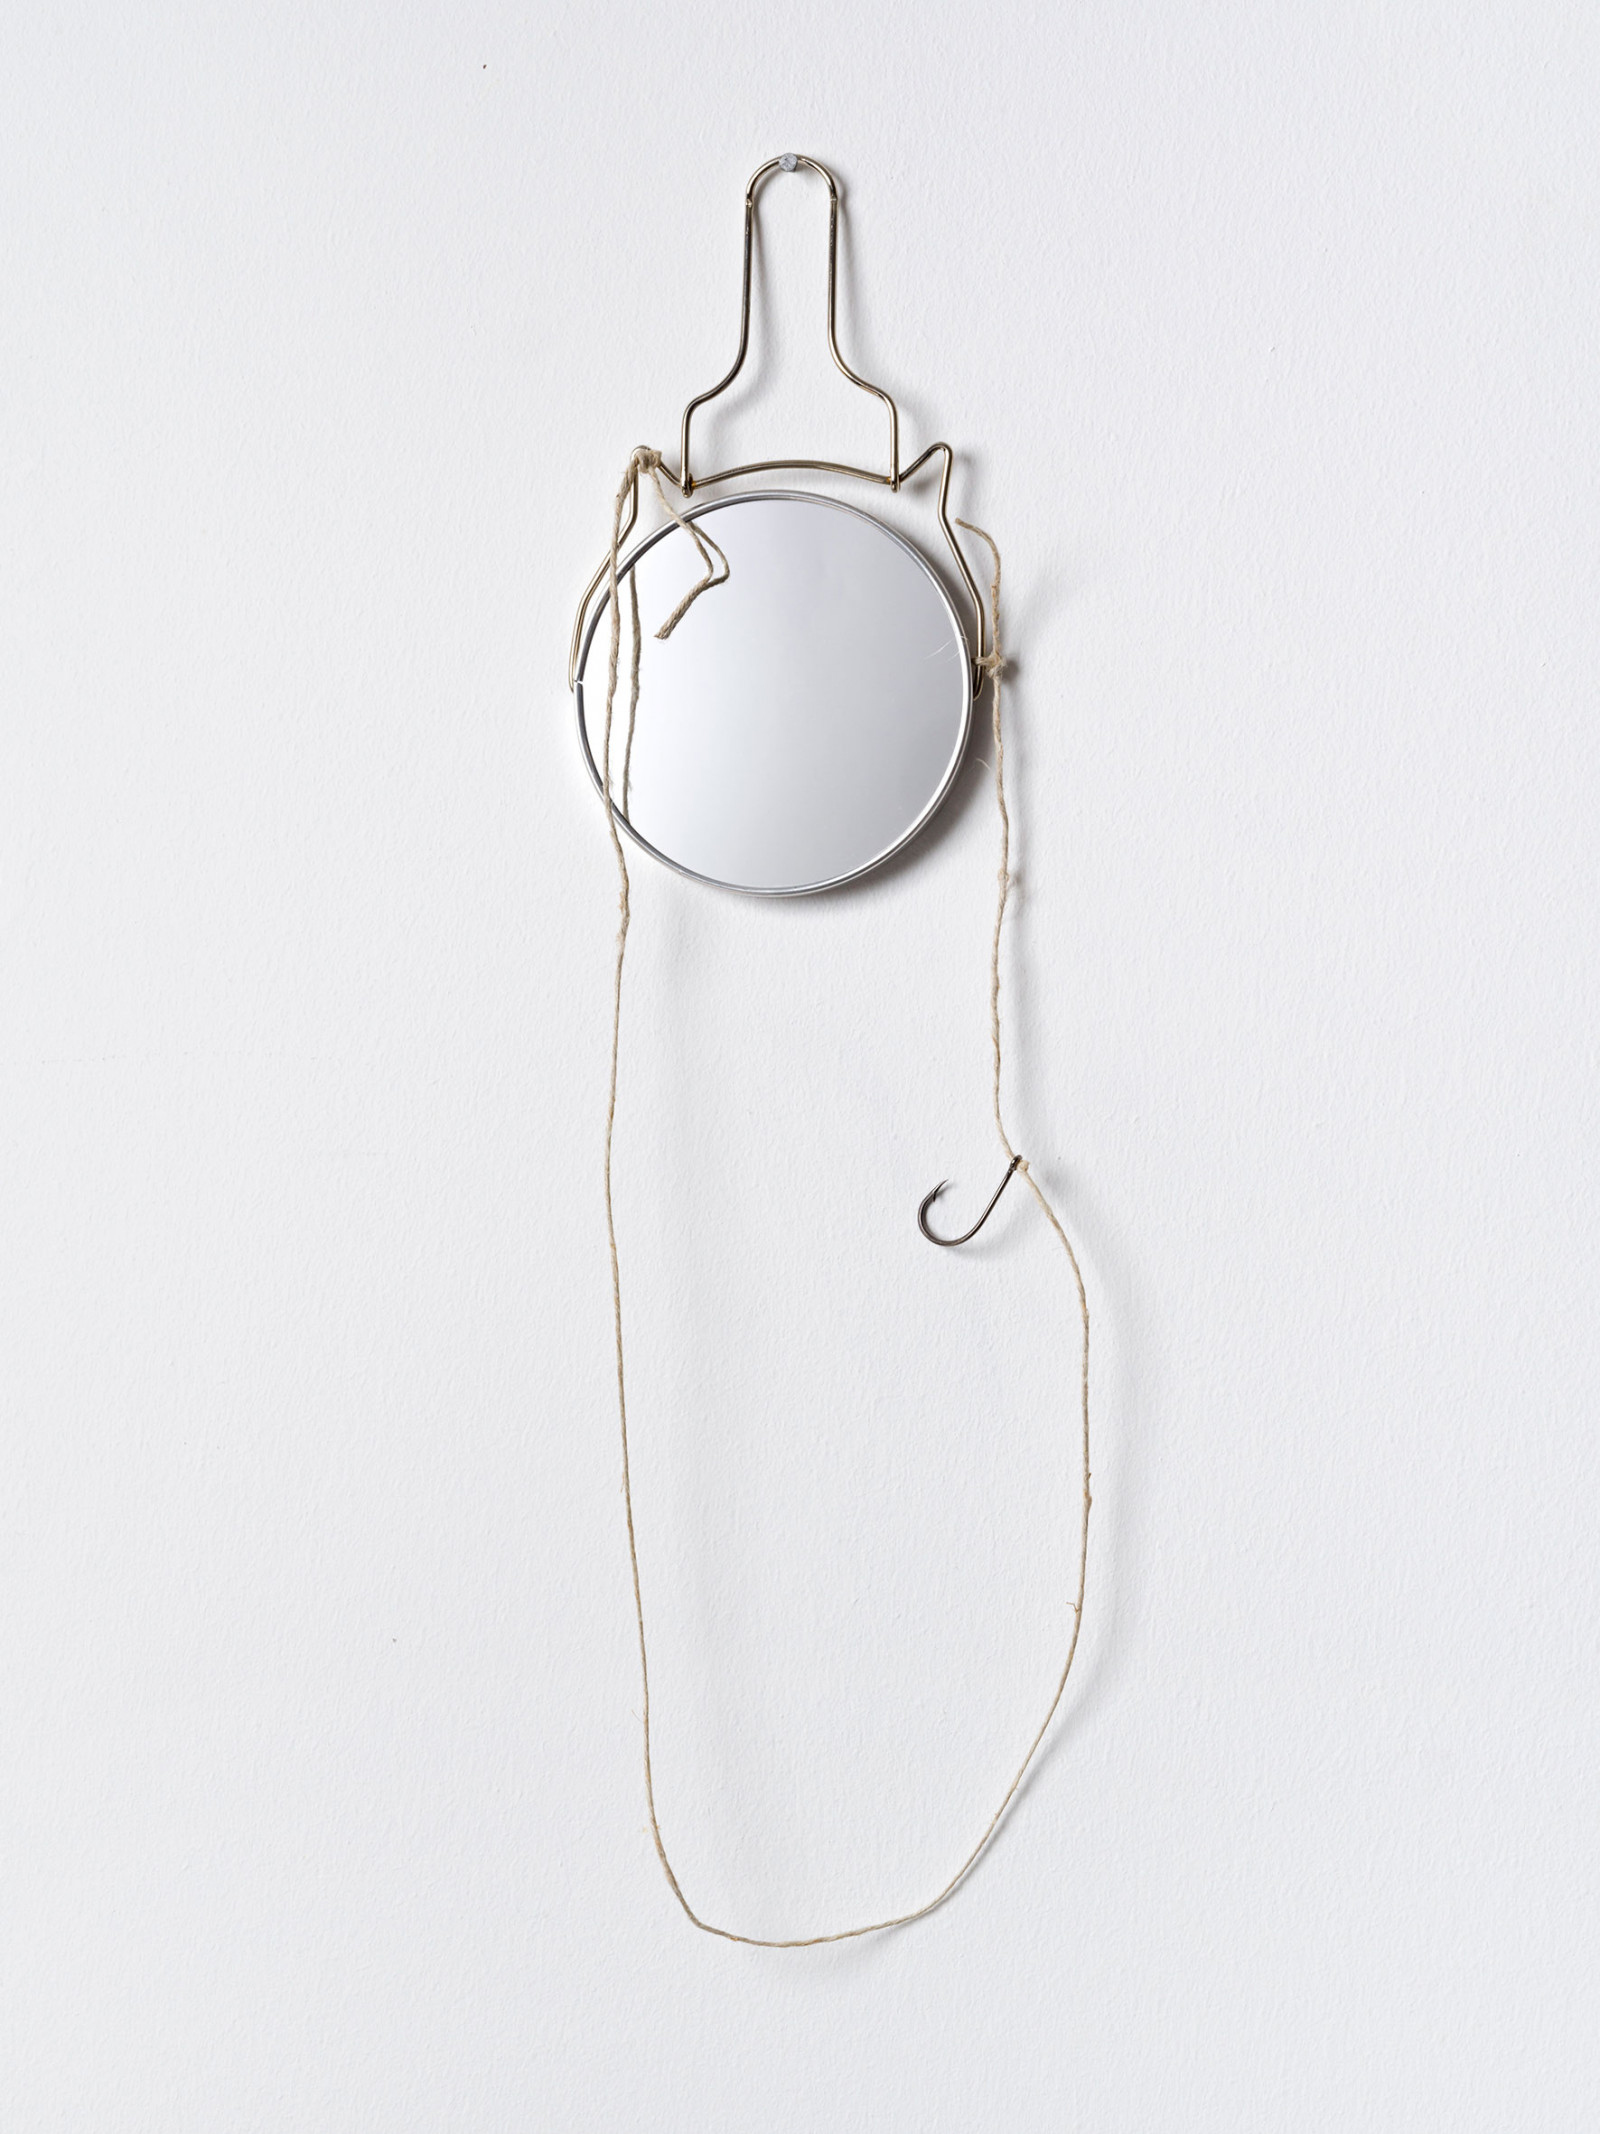 Kim Nekarda: 2022, Mirror, Line & Fishing Hook, 54 x 13 cm